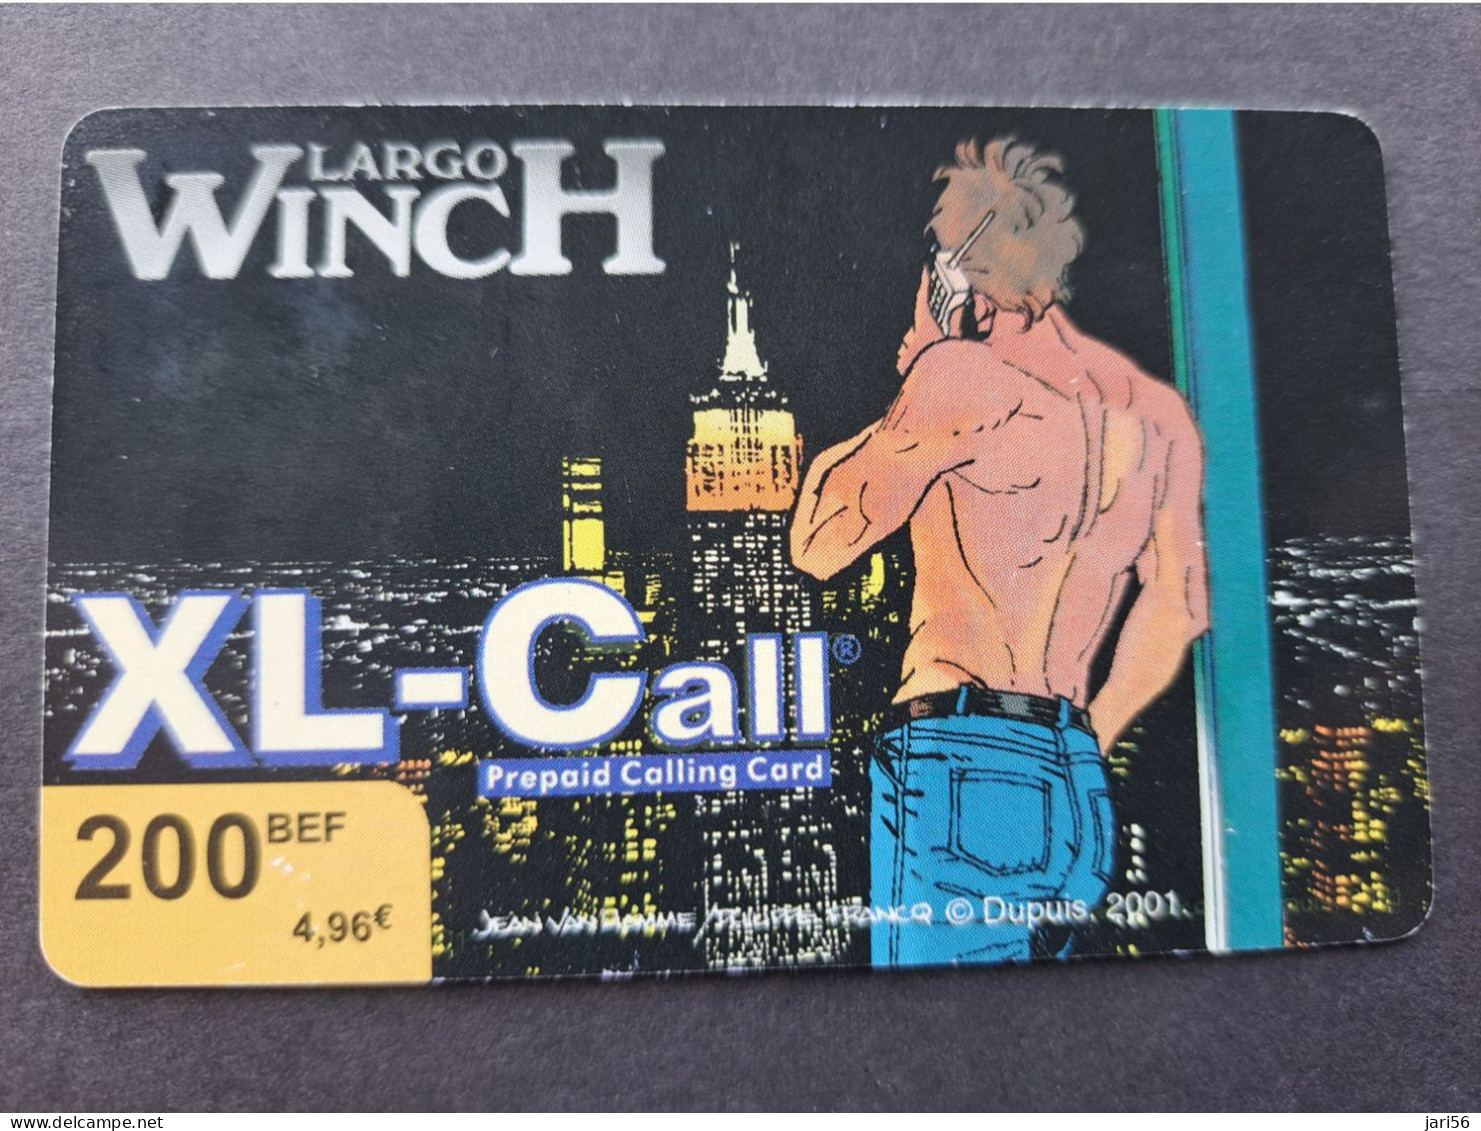 BELGIUM / XL-CALL € 4,96  /  LARGO- WINCH PREPAID /CITY BY NIGHT/    USED  CARD  ** 16617 ** - Zonder Chip